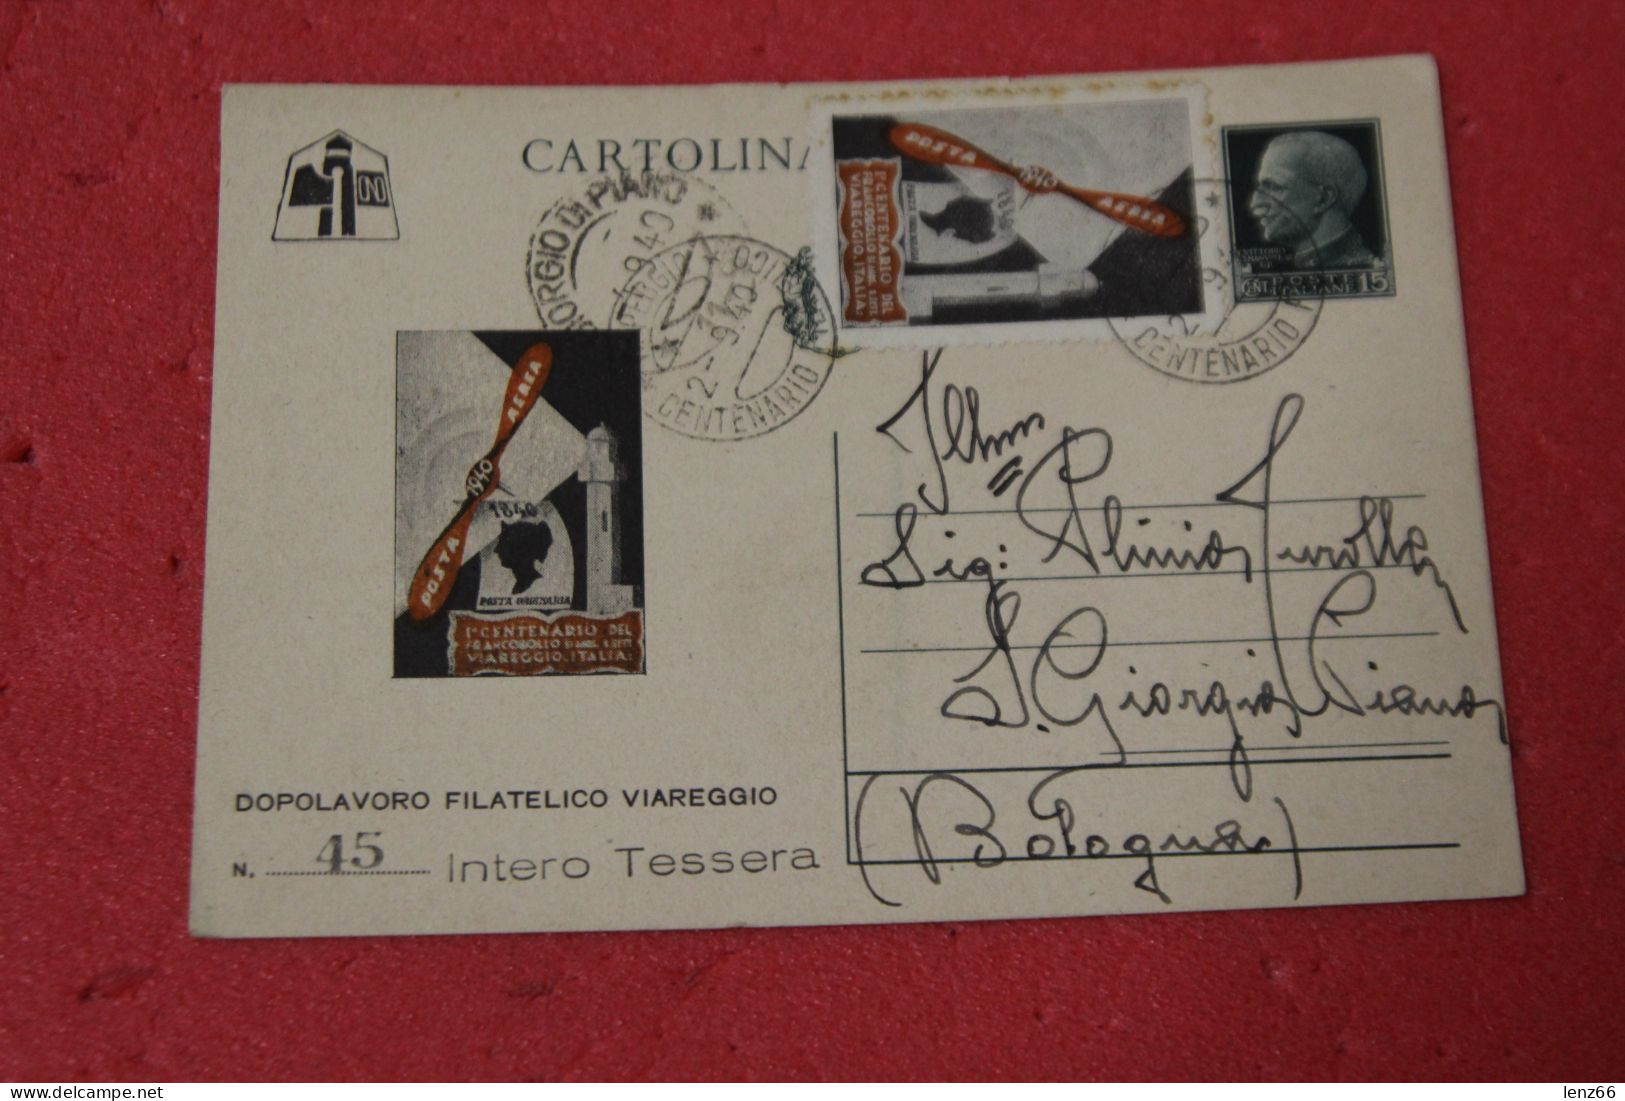 Viareggio Cartolina Per 1° Centenario Dopolavoro Filatelico 1940 Intero Tessera N. 45 PNF Fascio Raro++++ - Viareggio